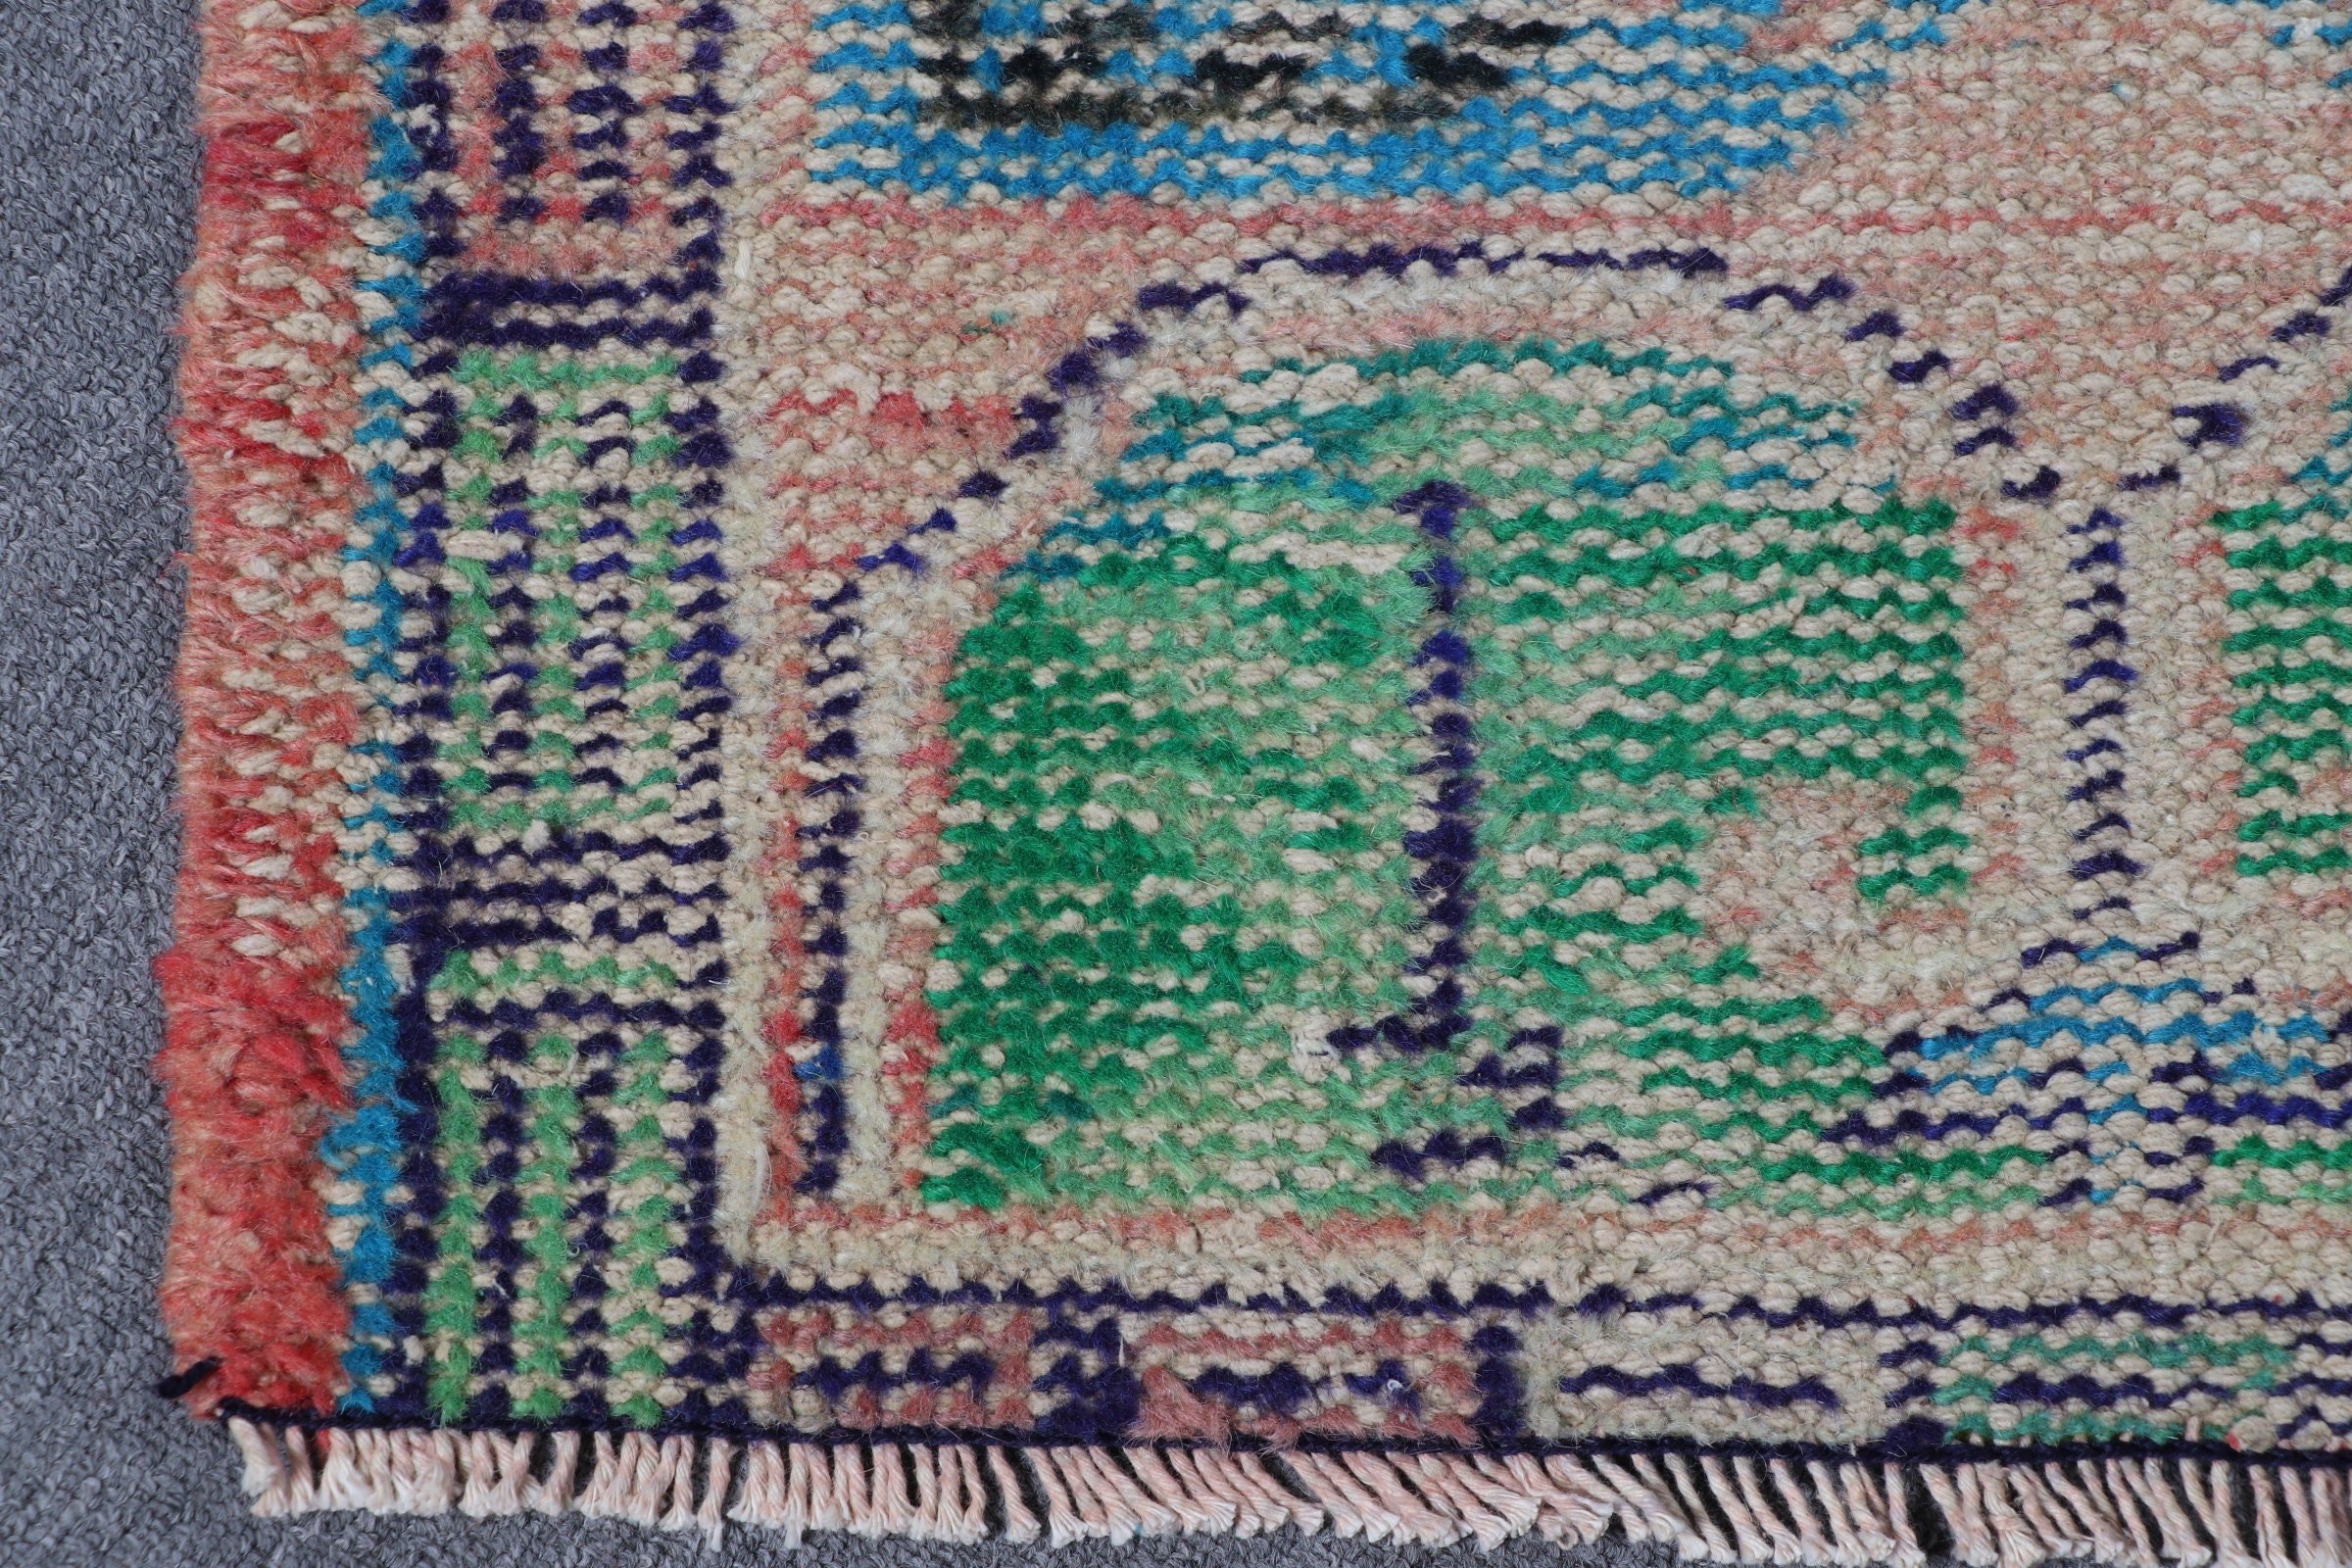 Vintage Rug, Wool Rug, Hand Knotted Rug, Turkish Rug, Wall Hanging Rug, Orange Oriental Rug, 2x3.4 ft Small Rug, Bath Rugs, Kitchen Rugs